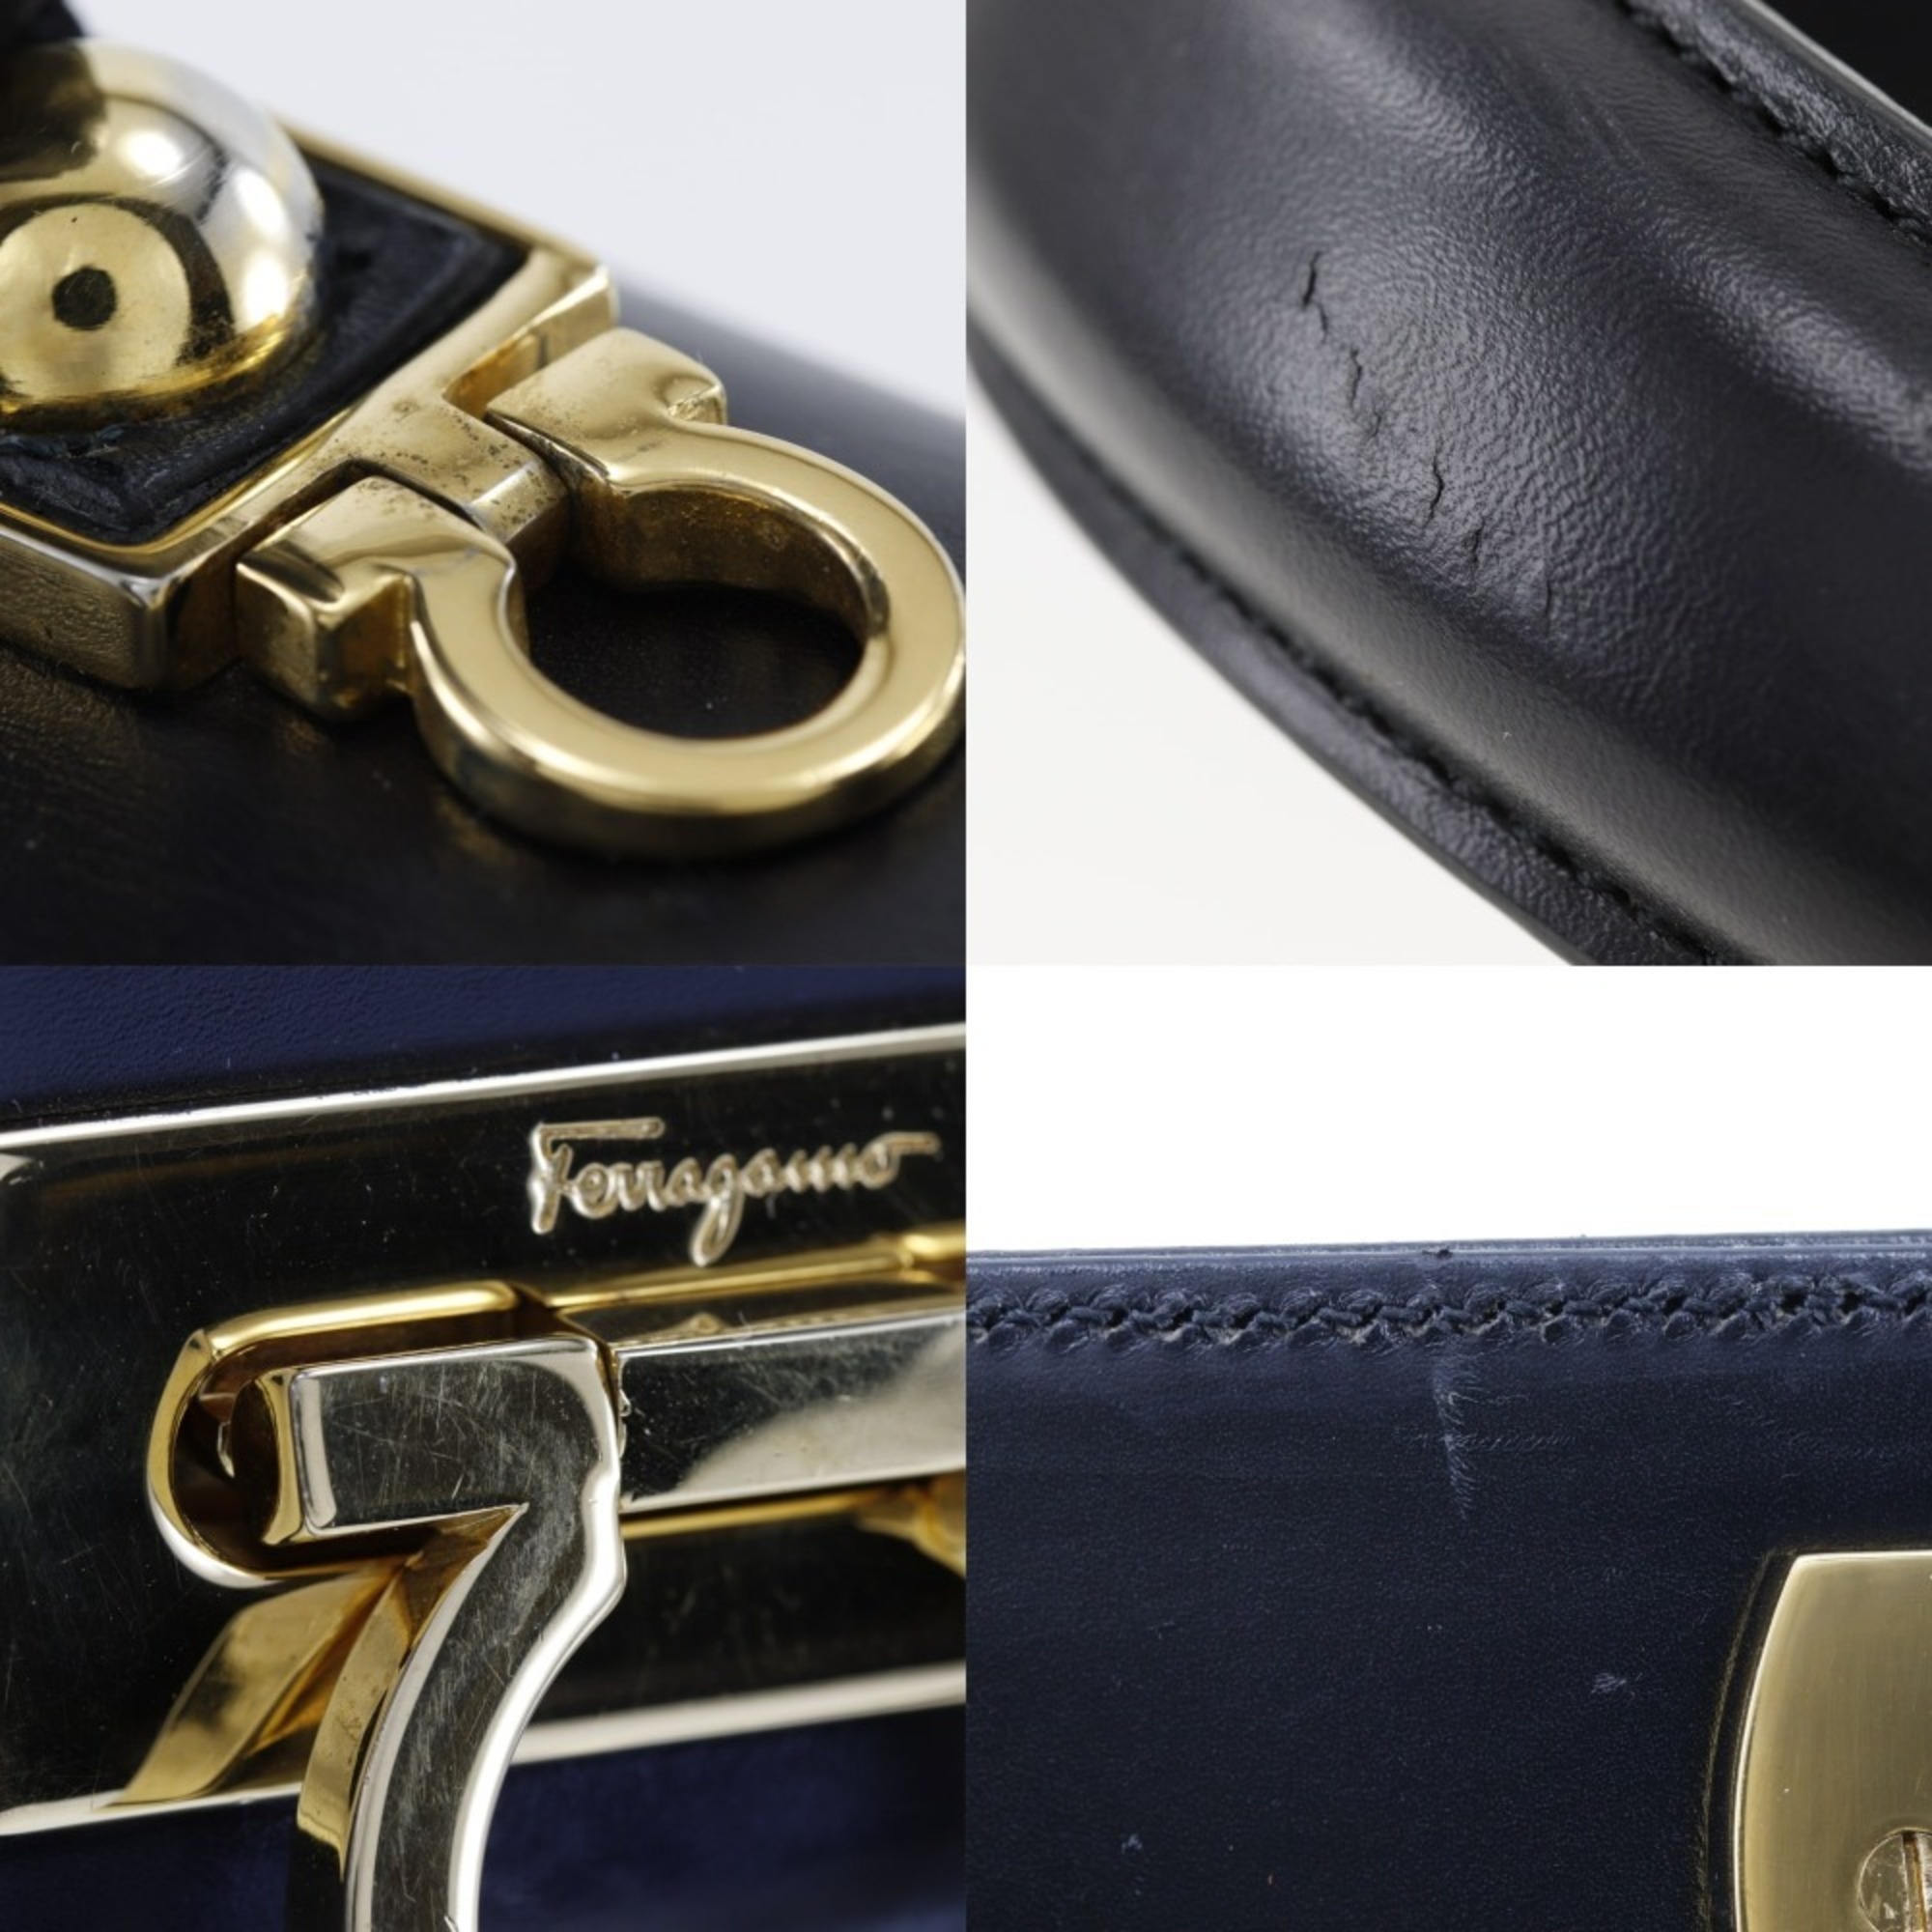 Salvatore Ferragamo Gancini handbag AT-21 0536 calfskin flap women's I131824020